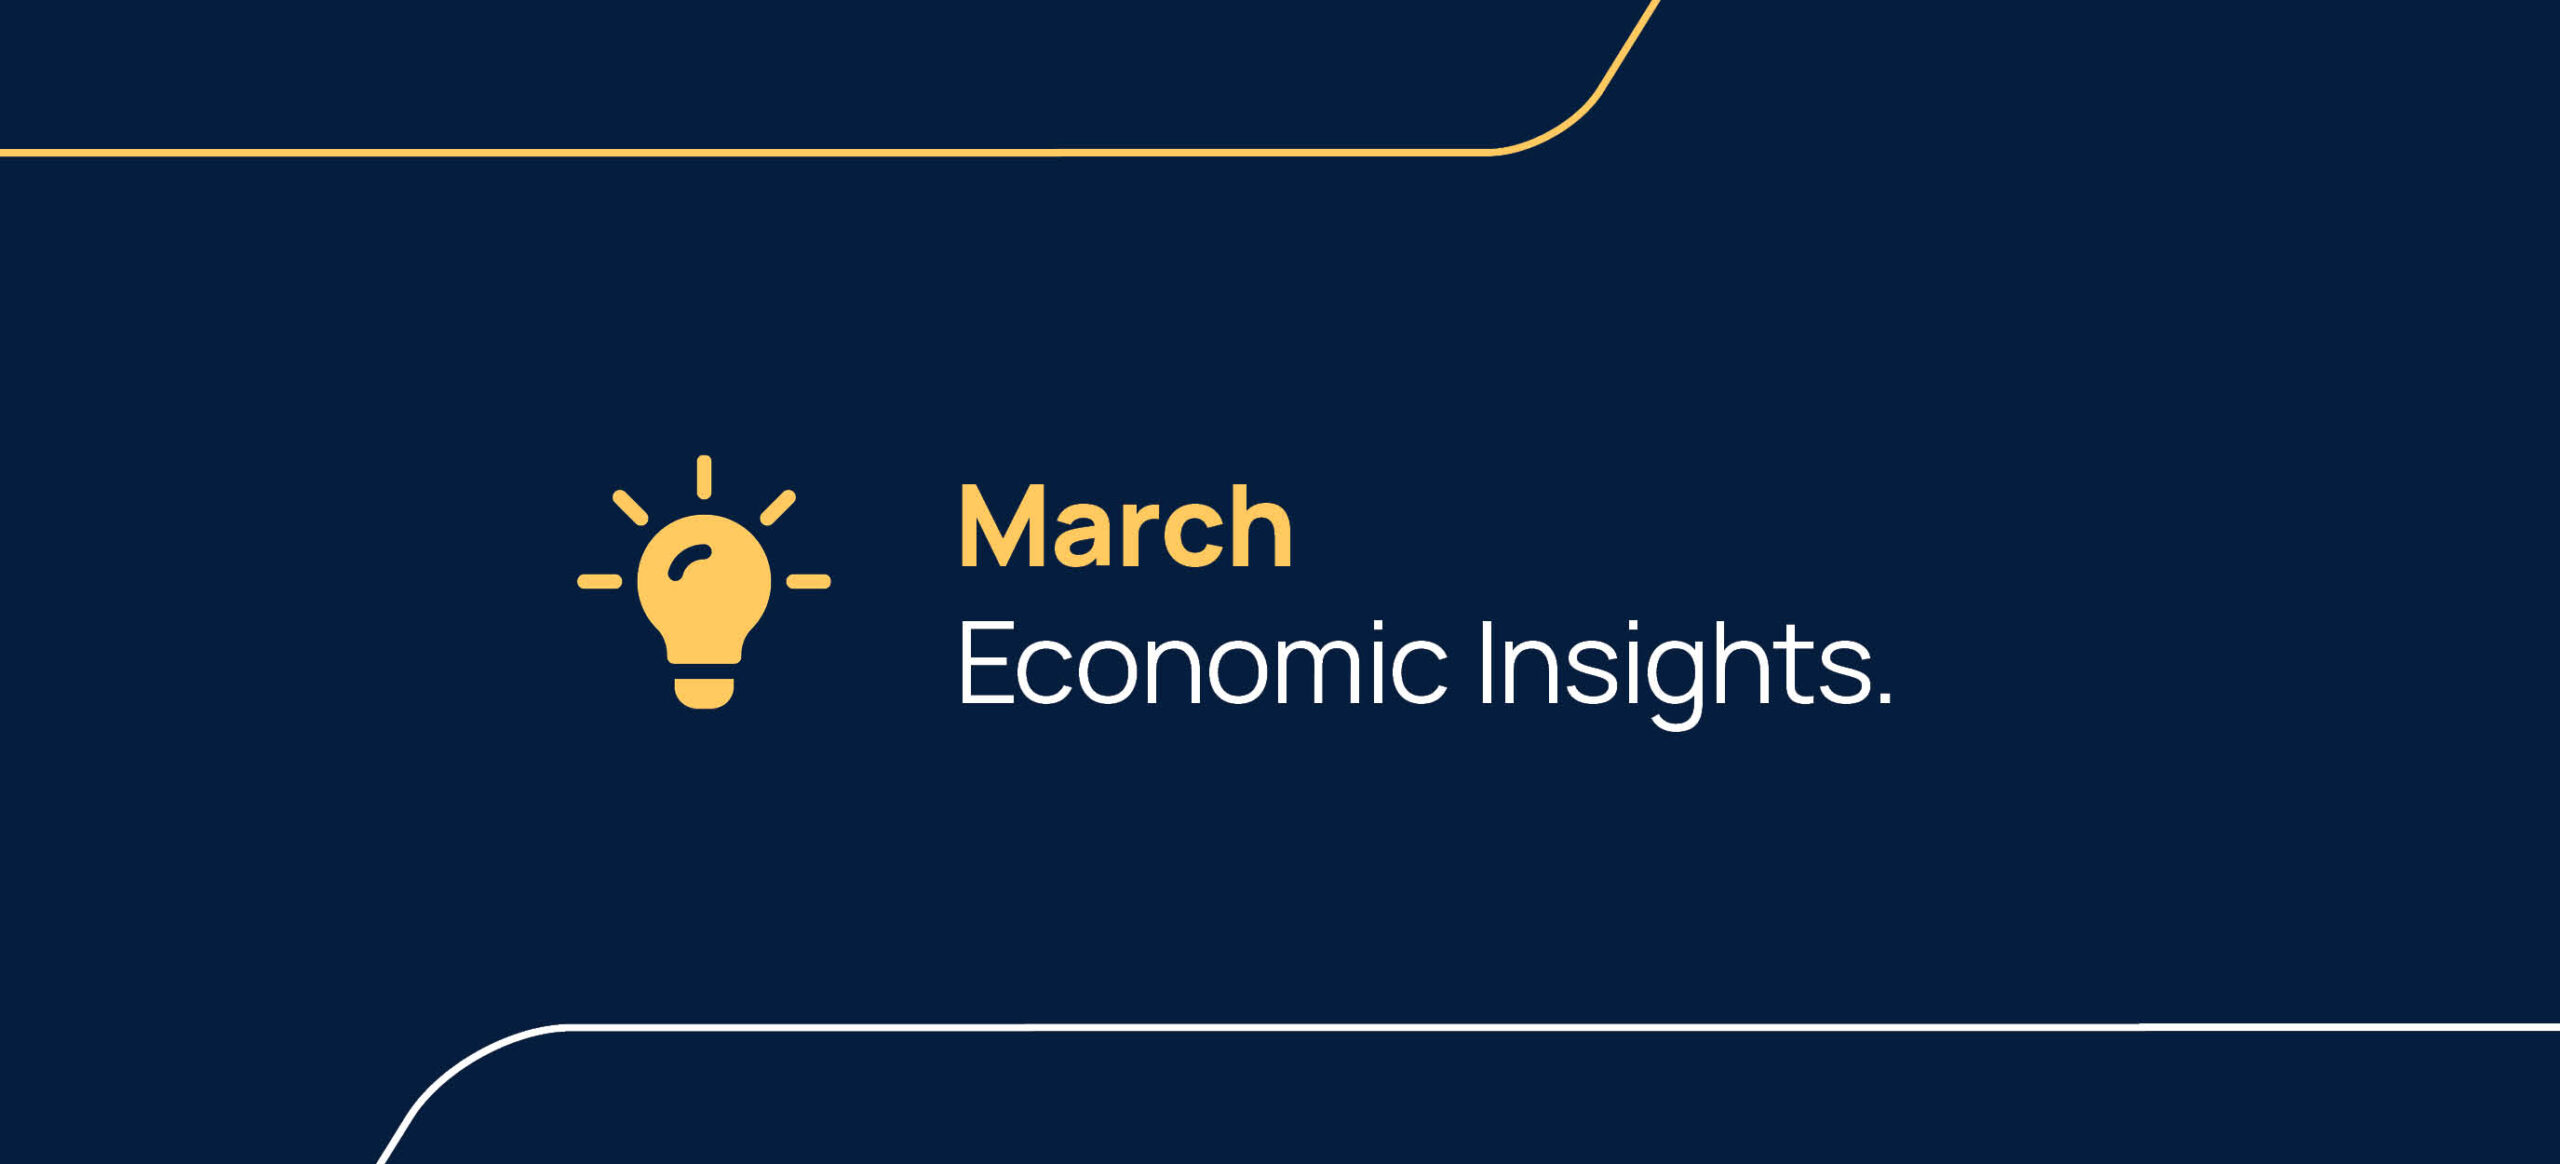 March Economic Insights